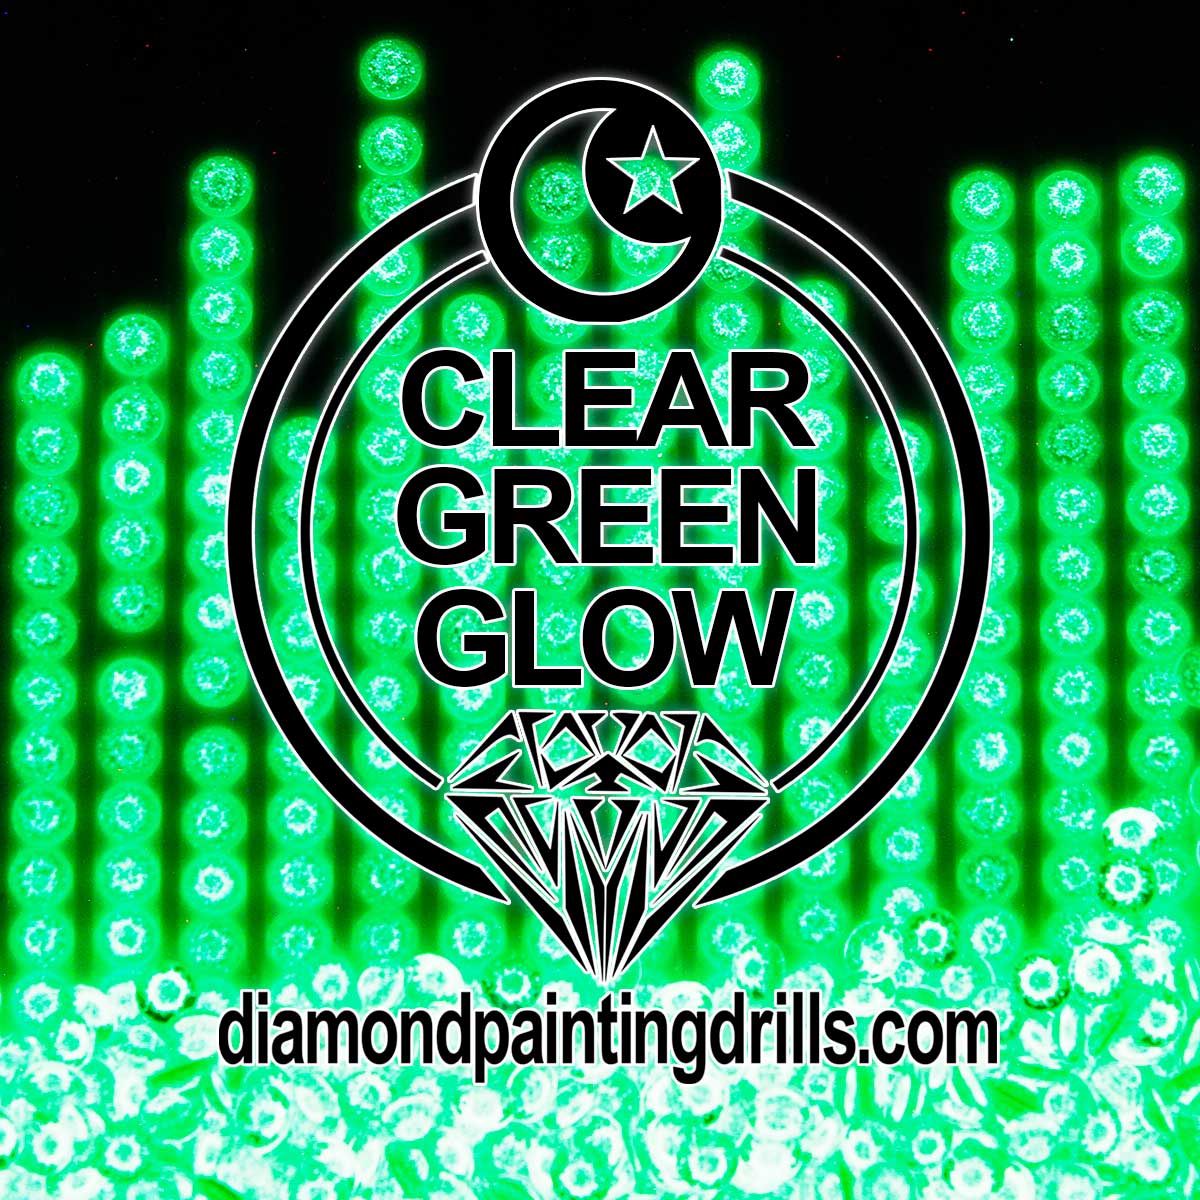 Aqua Clear Glow in the Dark Round Drills - Diamond Painting Drills